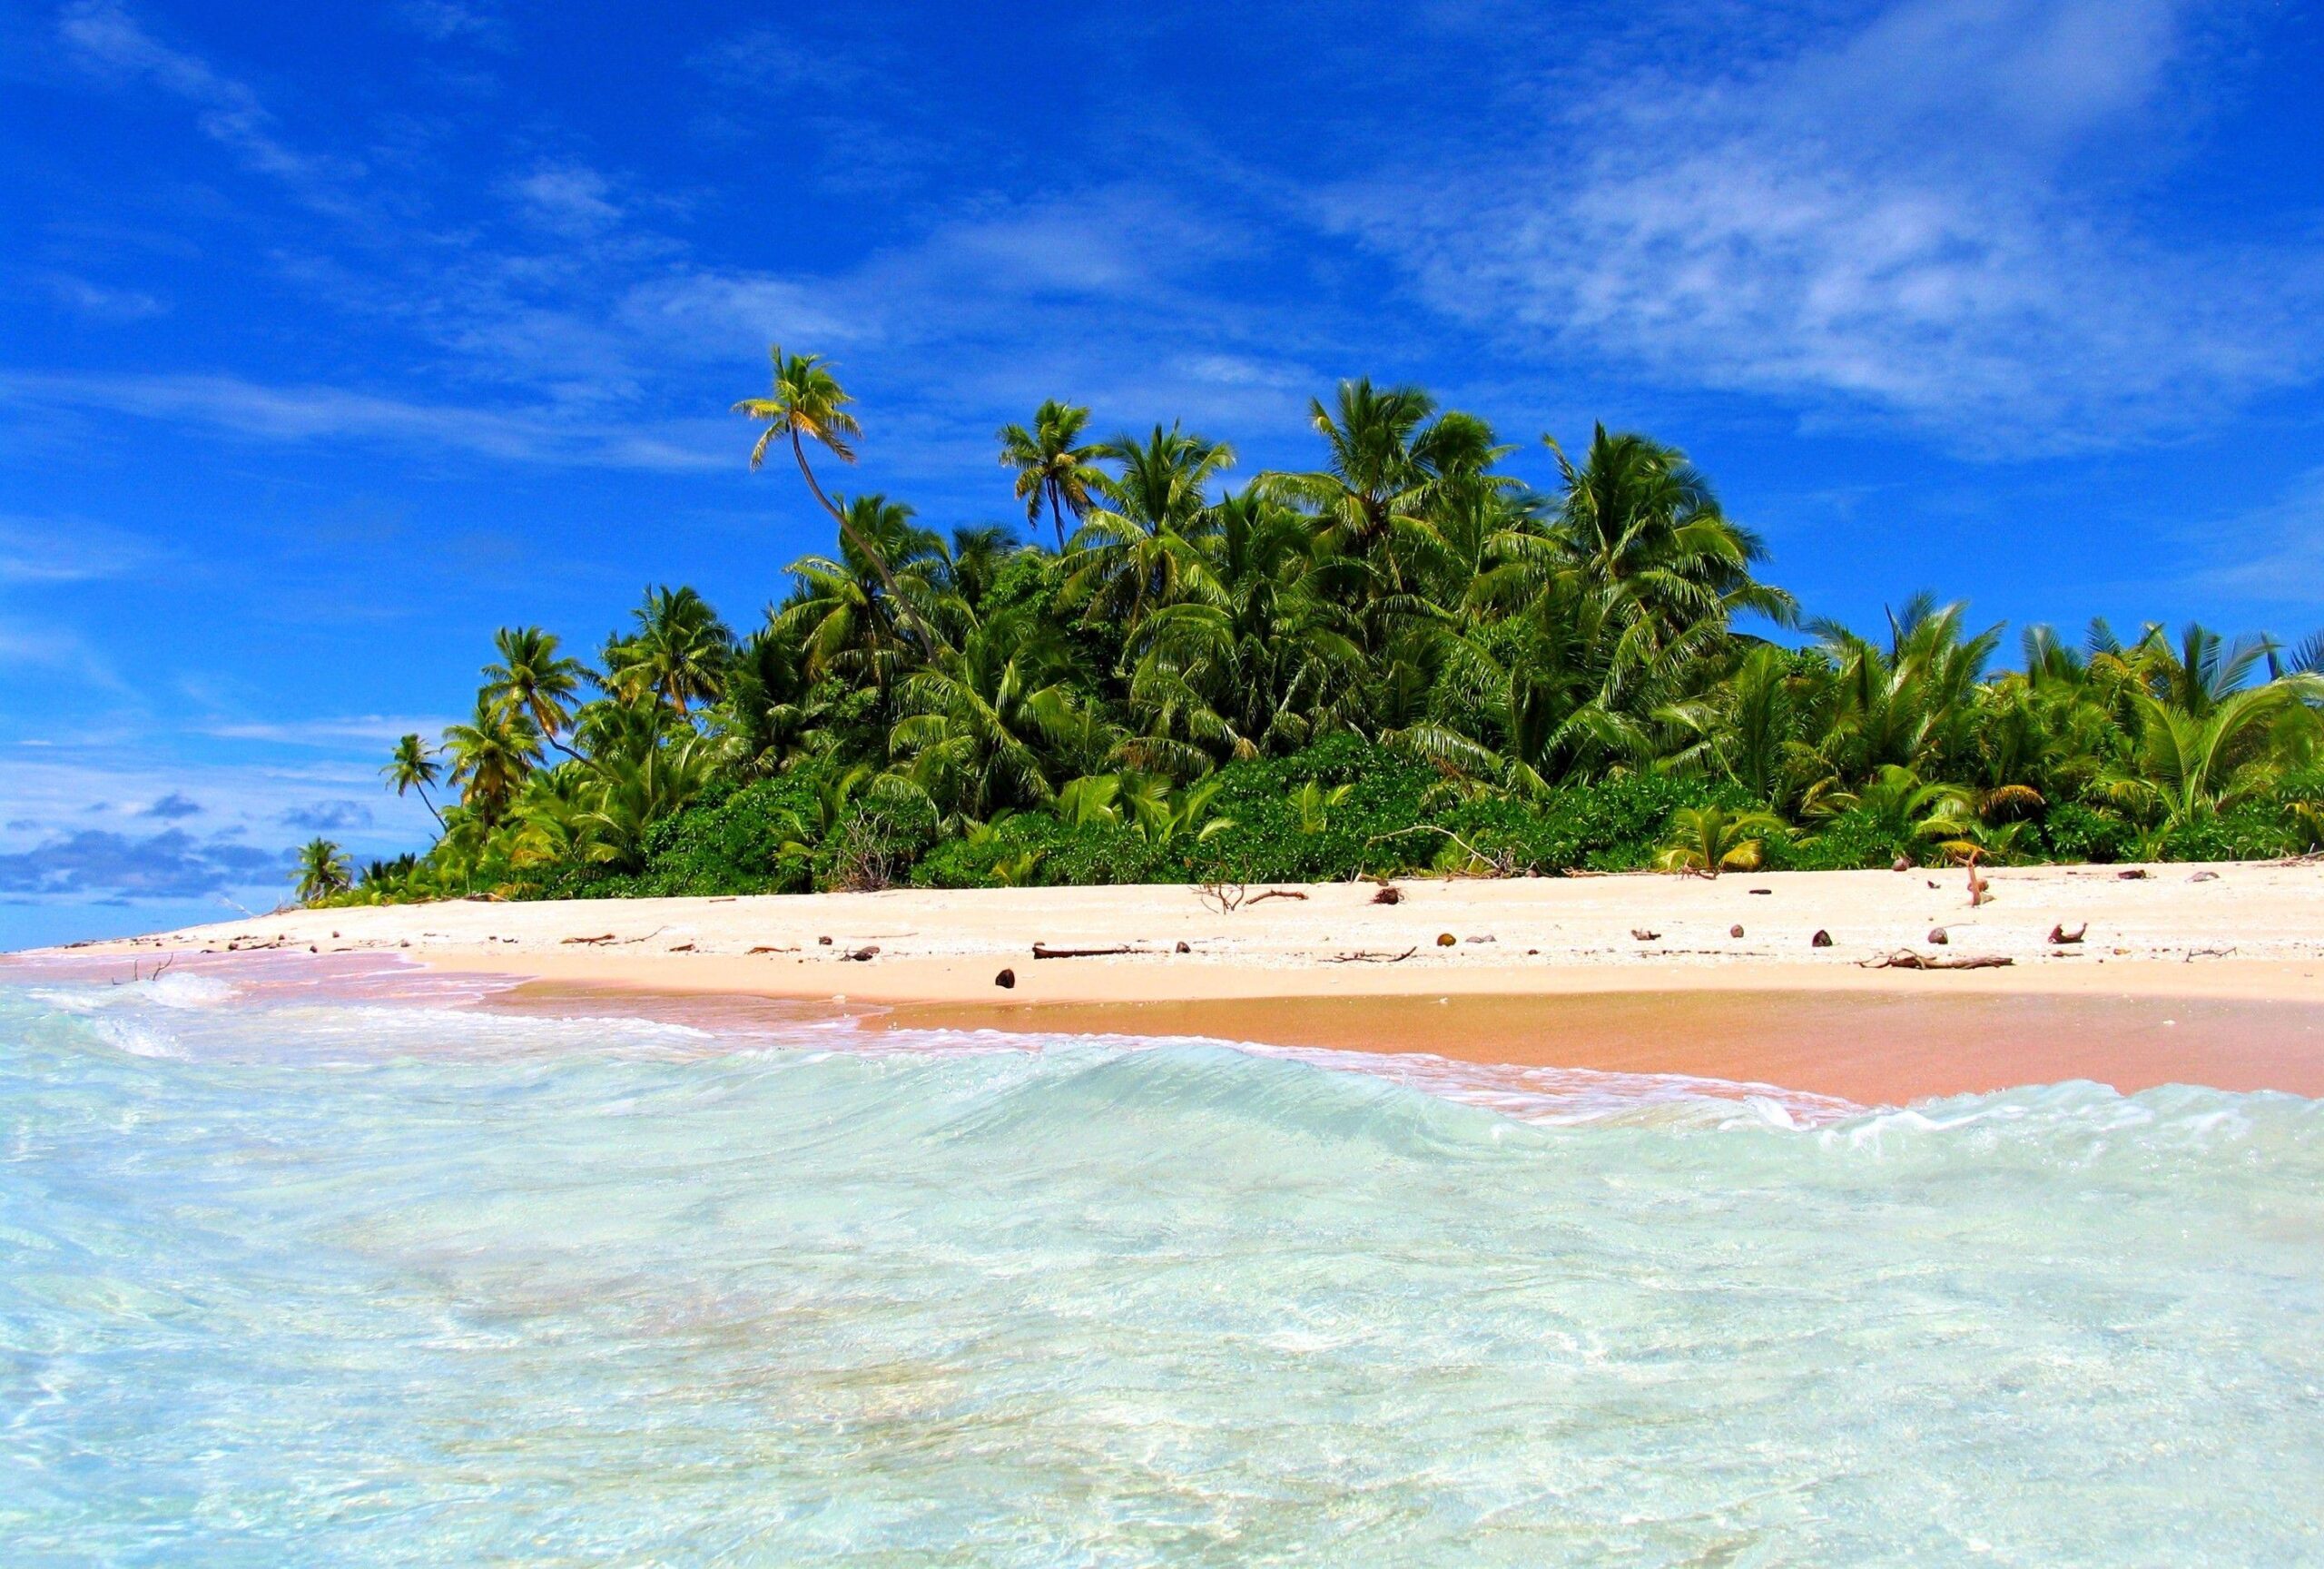 Beach Funafuti Atoll Tuvalu Island Paradisiac Sand Sea Palms